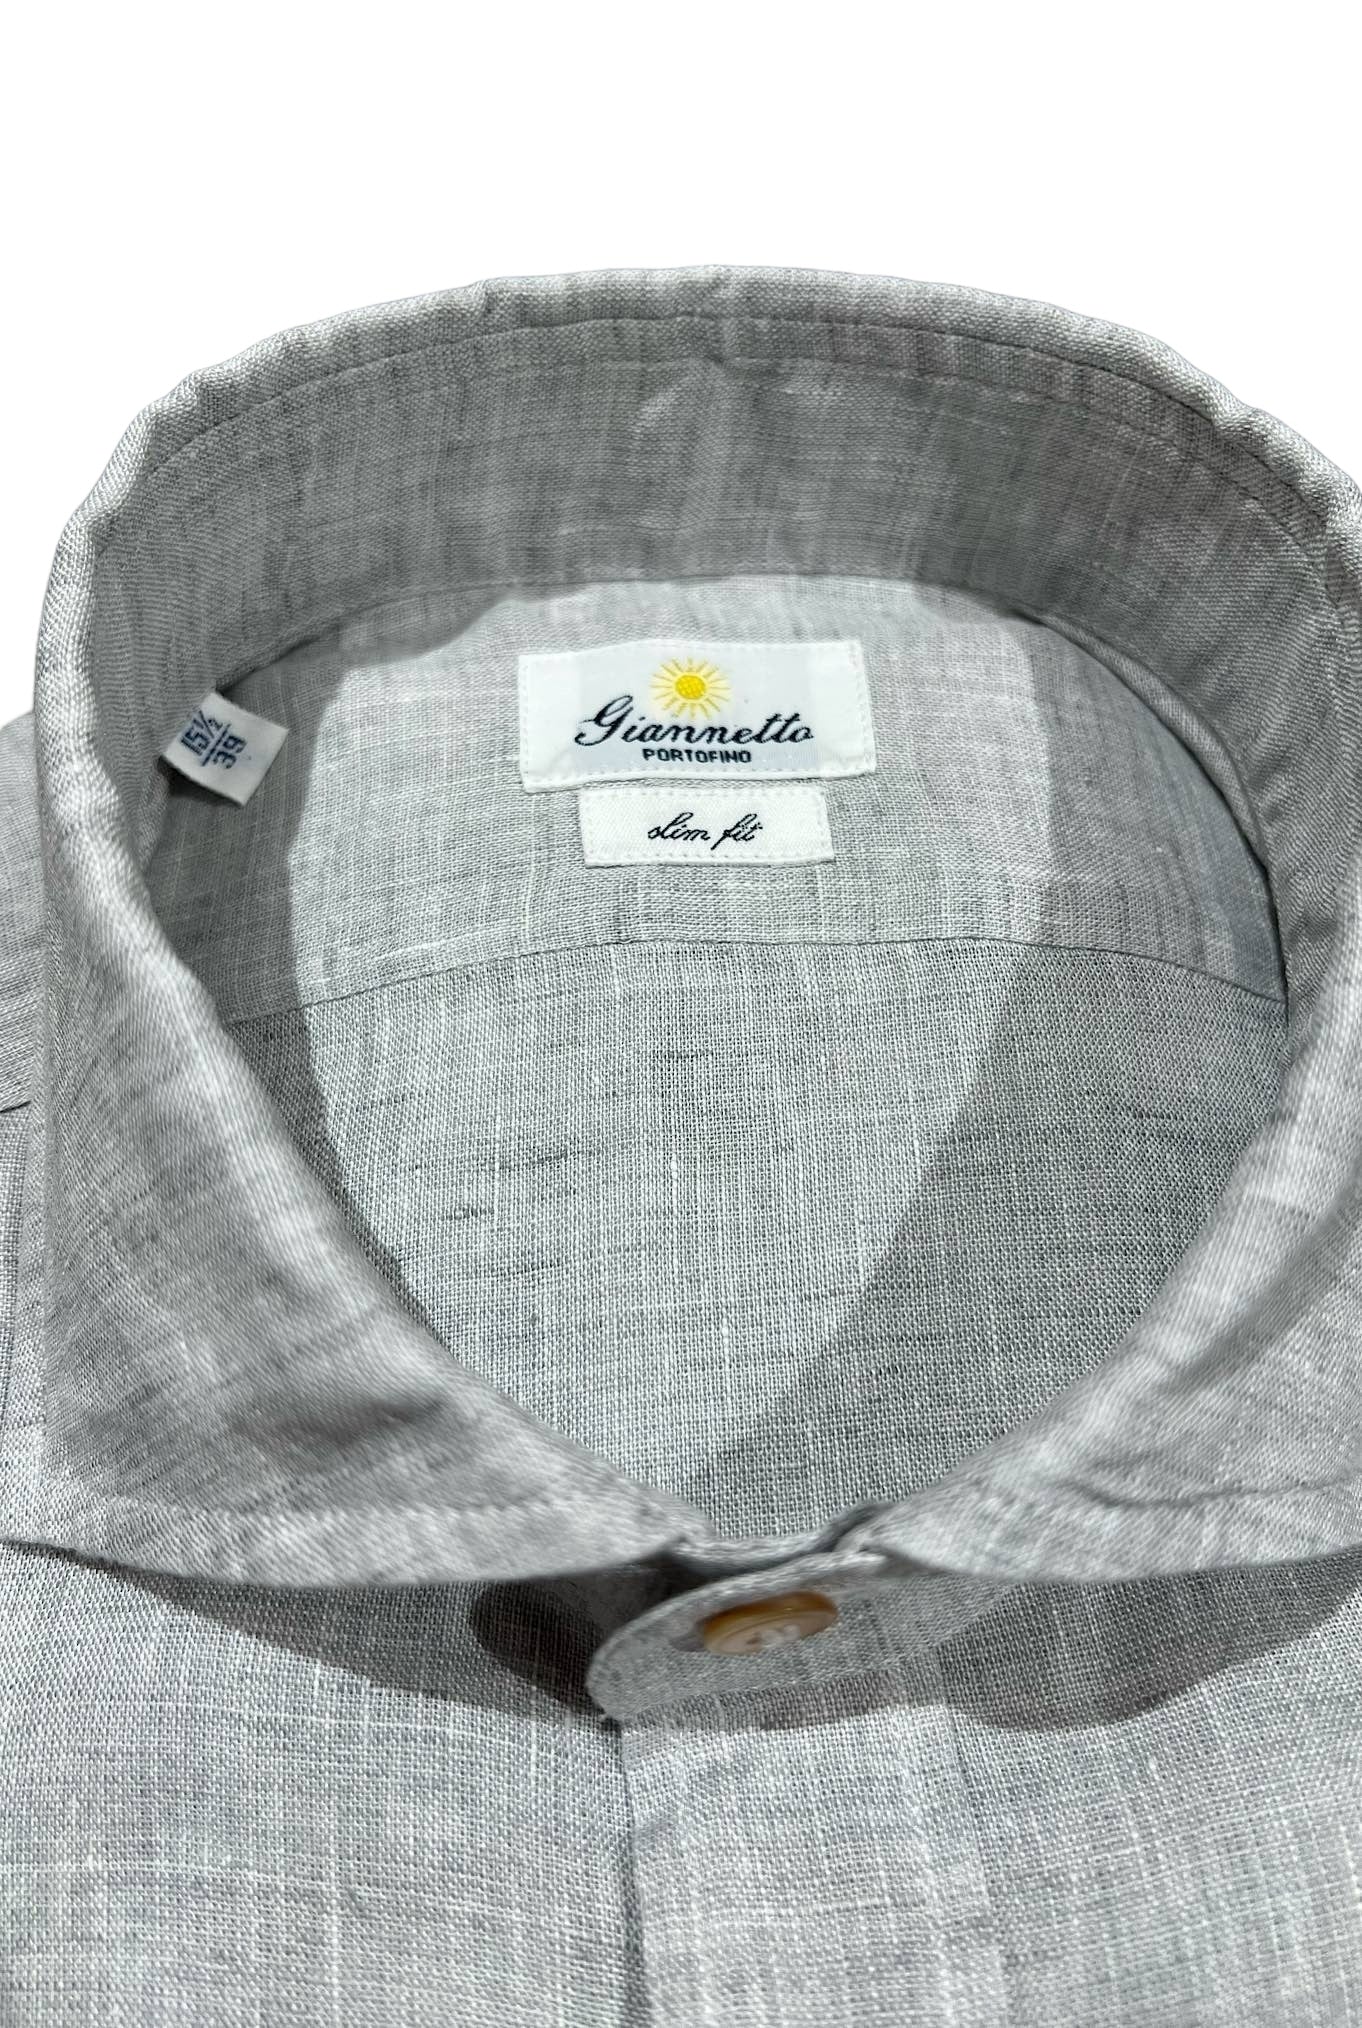 GIANNETTO PORTOFINO Ice Linen Shirt COMFORT FIT